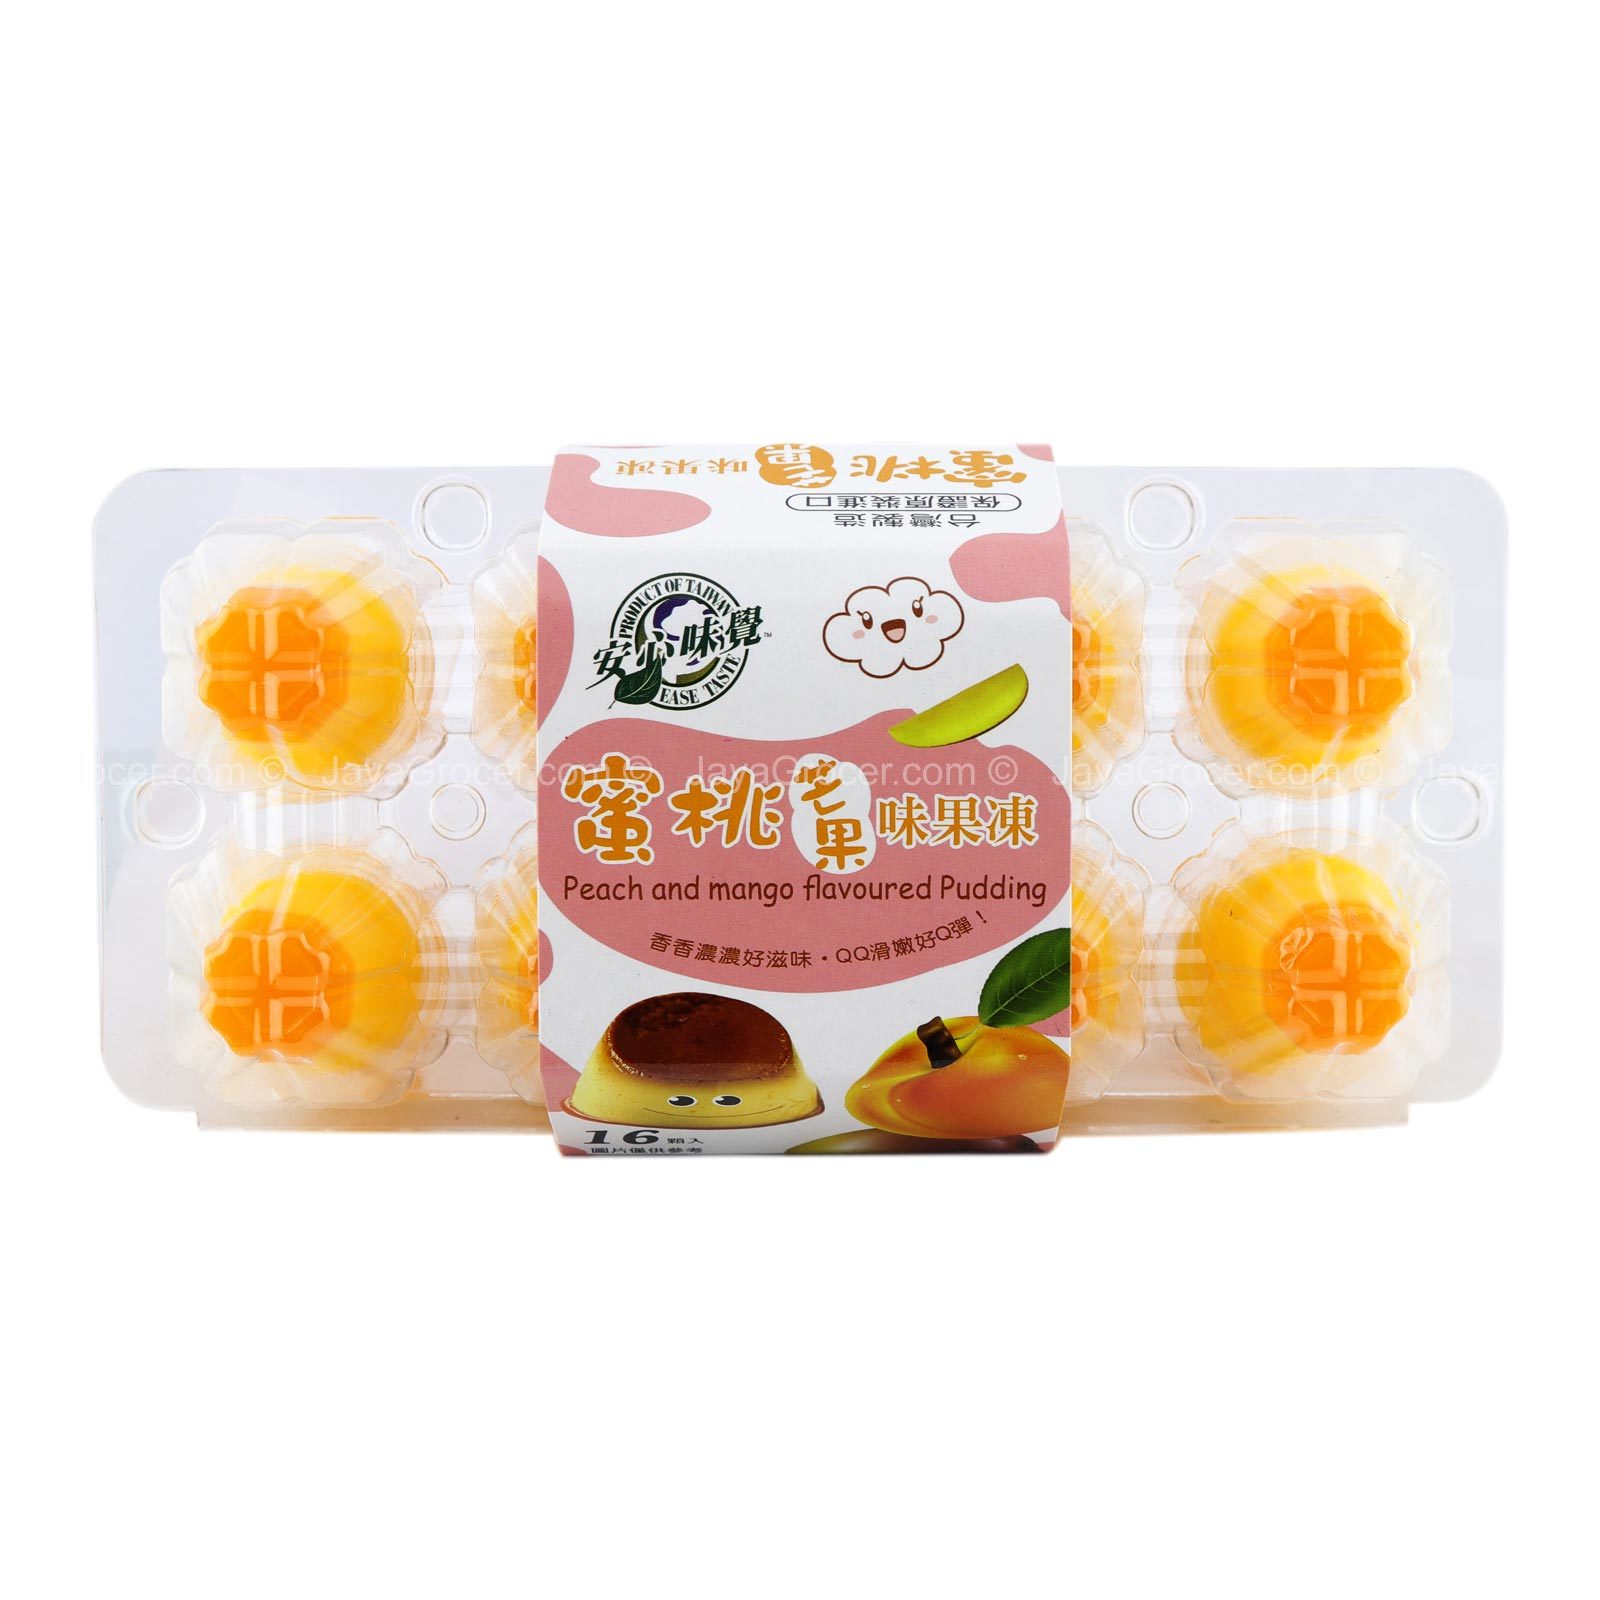 Taiwan Ease Taste Pudding Jelly - Peach & Mango 台湾 安心味觉 鸡蛋布丁 果冻 - 蜜桃芒果